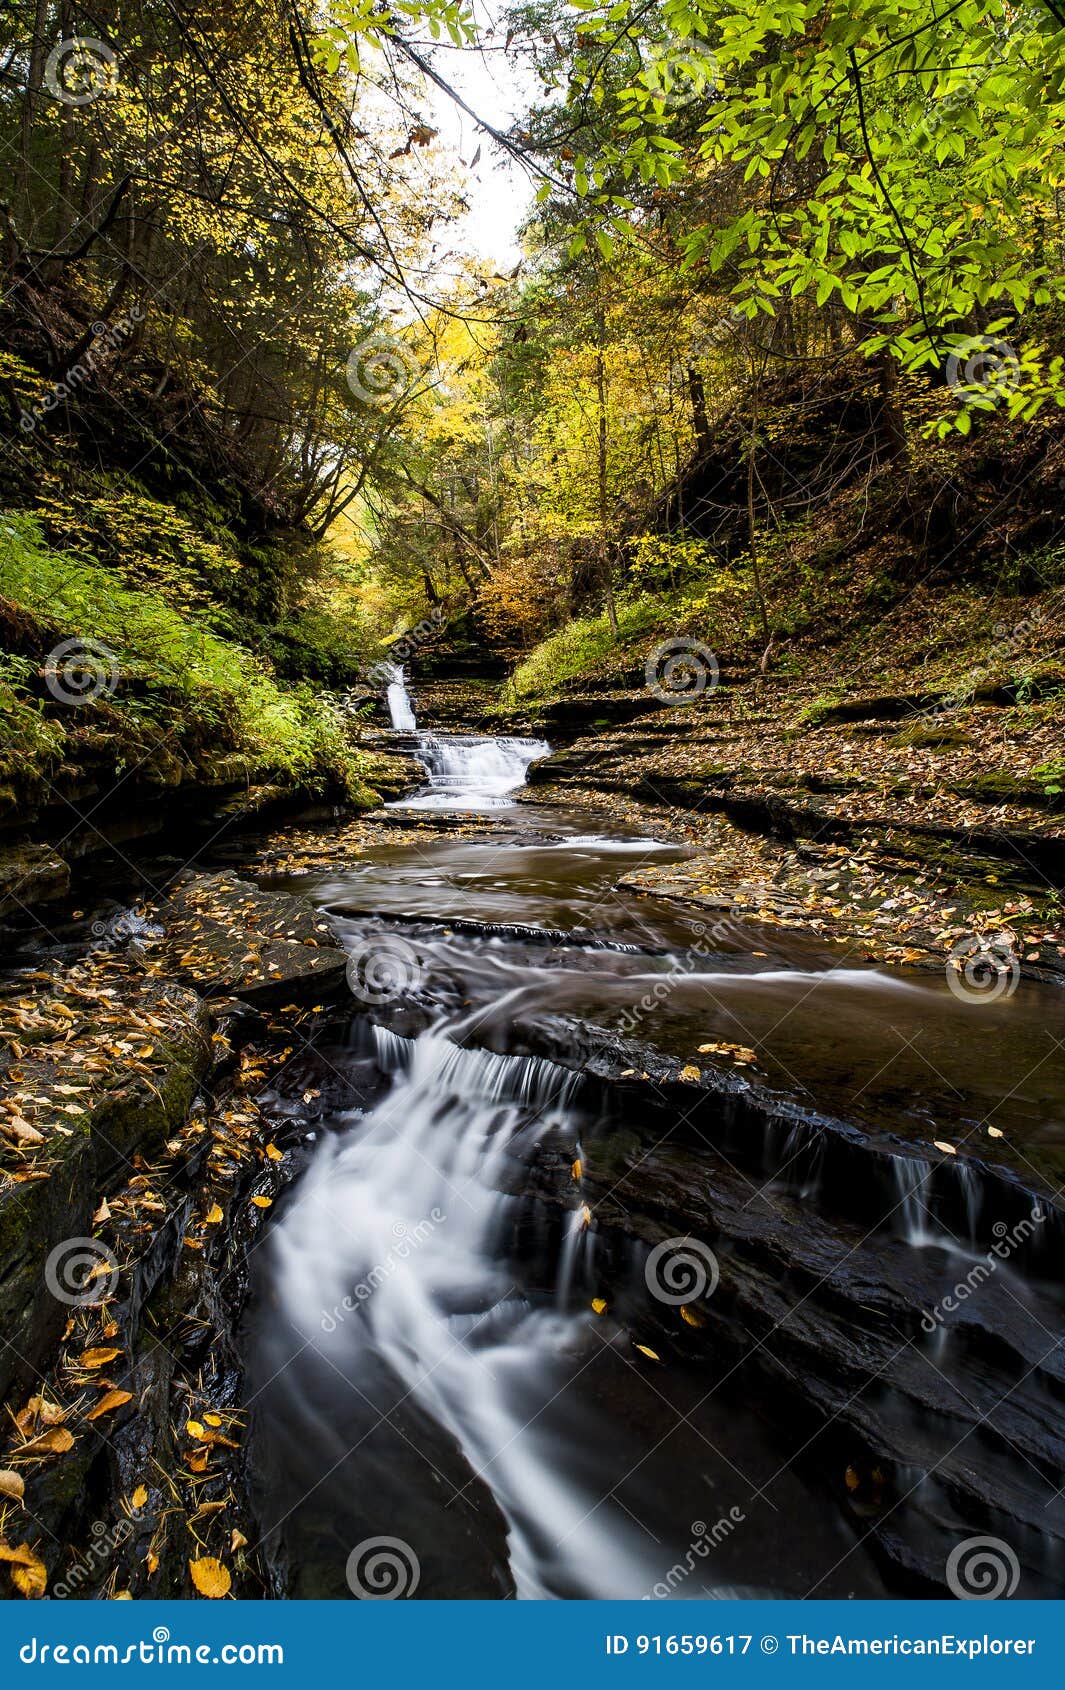 she-qua-ga falls - waterfall and autumn / fall colors - new york